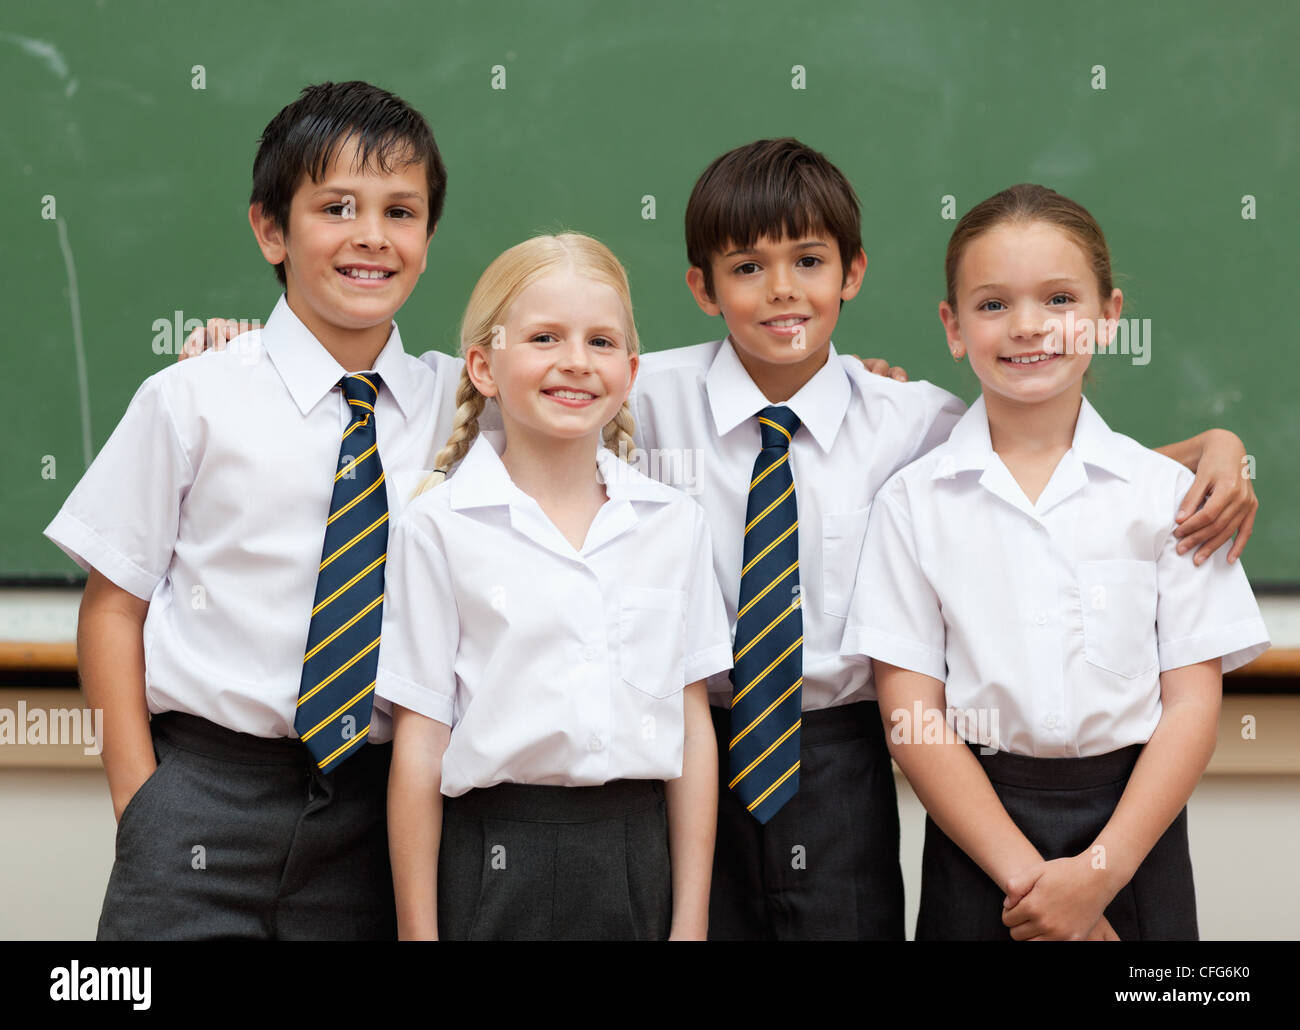 Smiling schoolfellows in school uniforms standing in front of blackboard Stock Photo